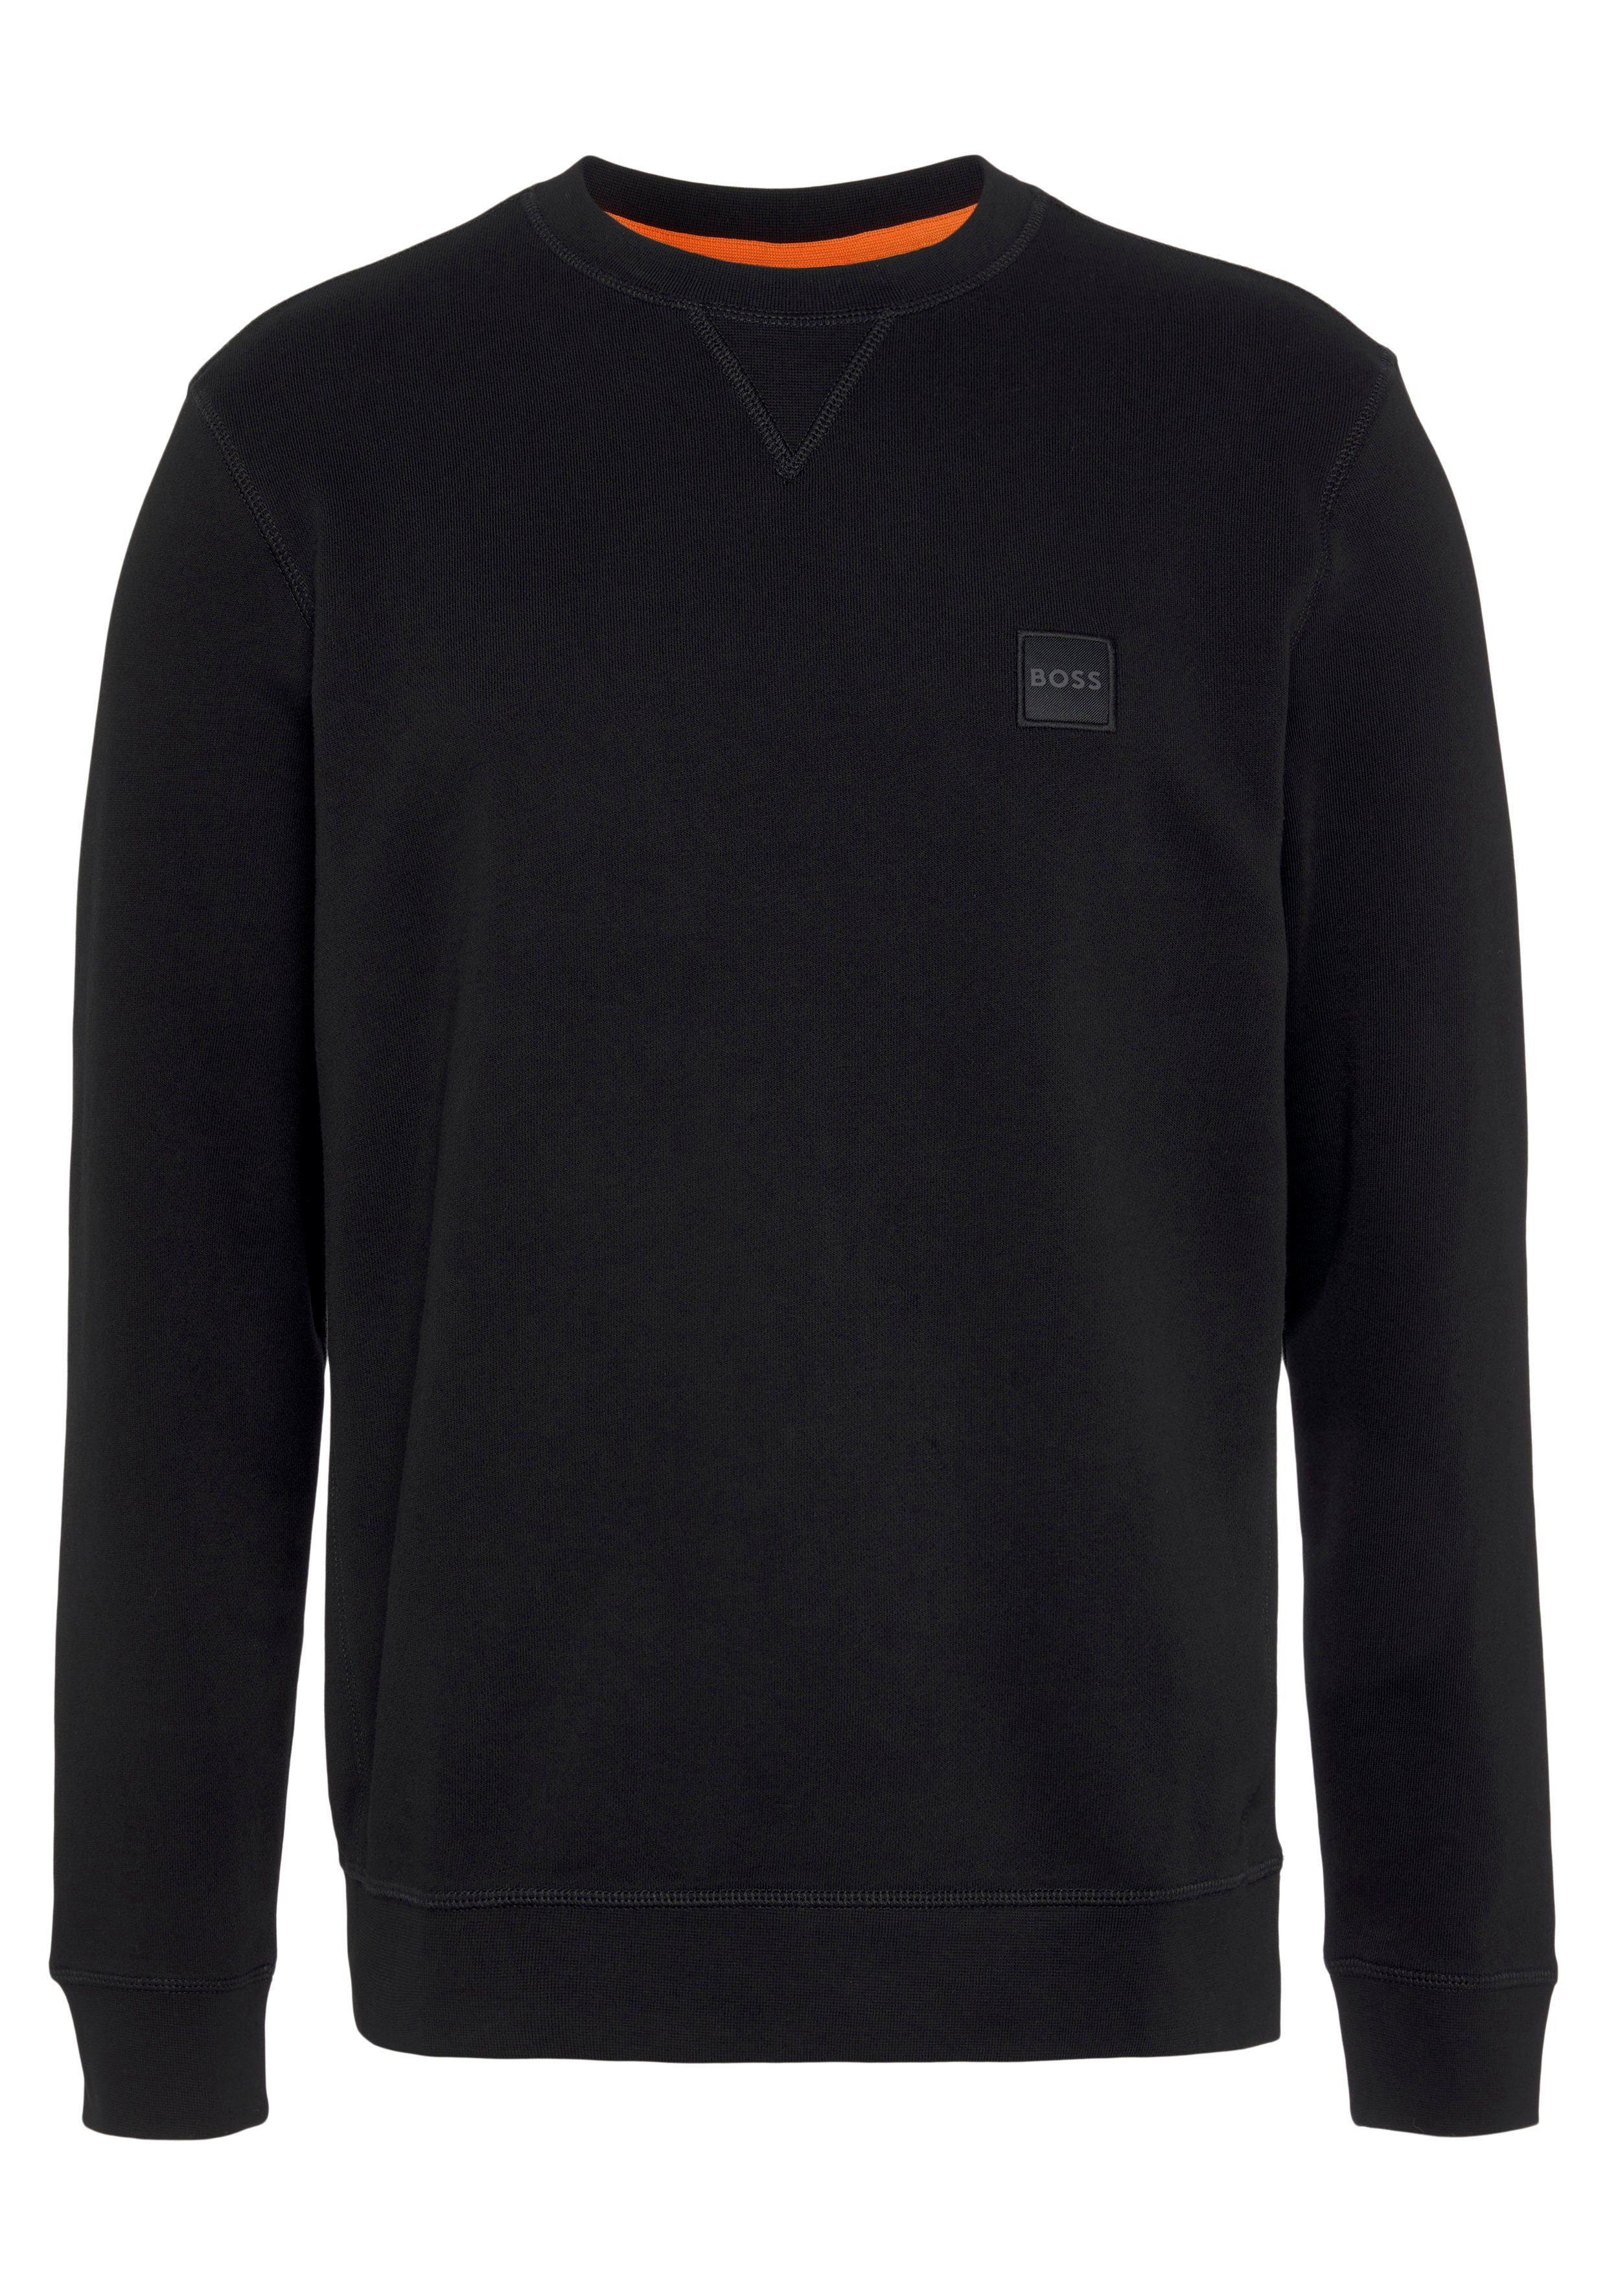 Westart BOSS ORANGE aufgesticktem mit Sweatshirt black001 Logo BOSS